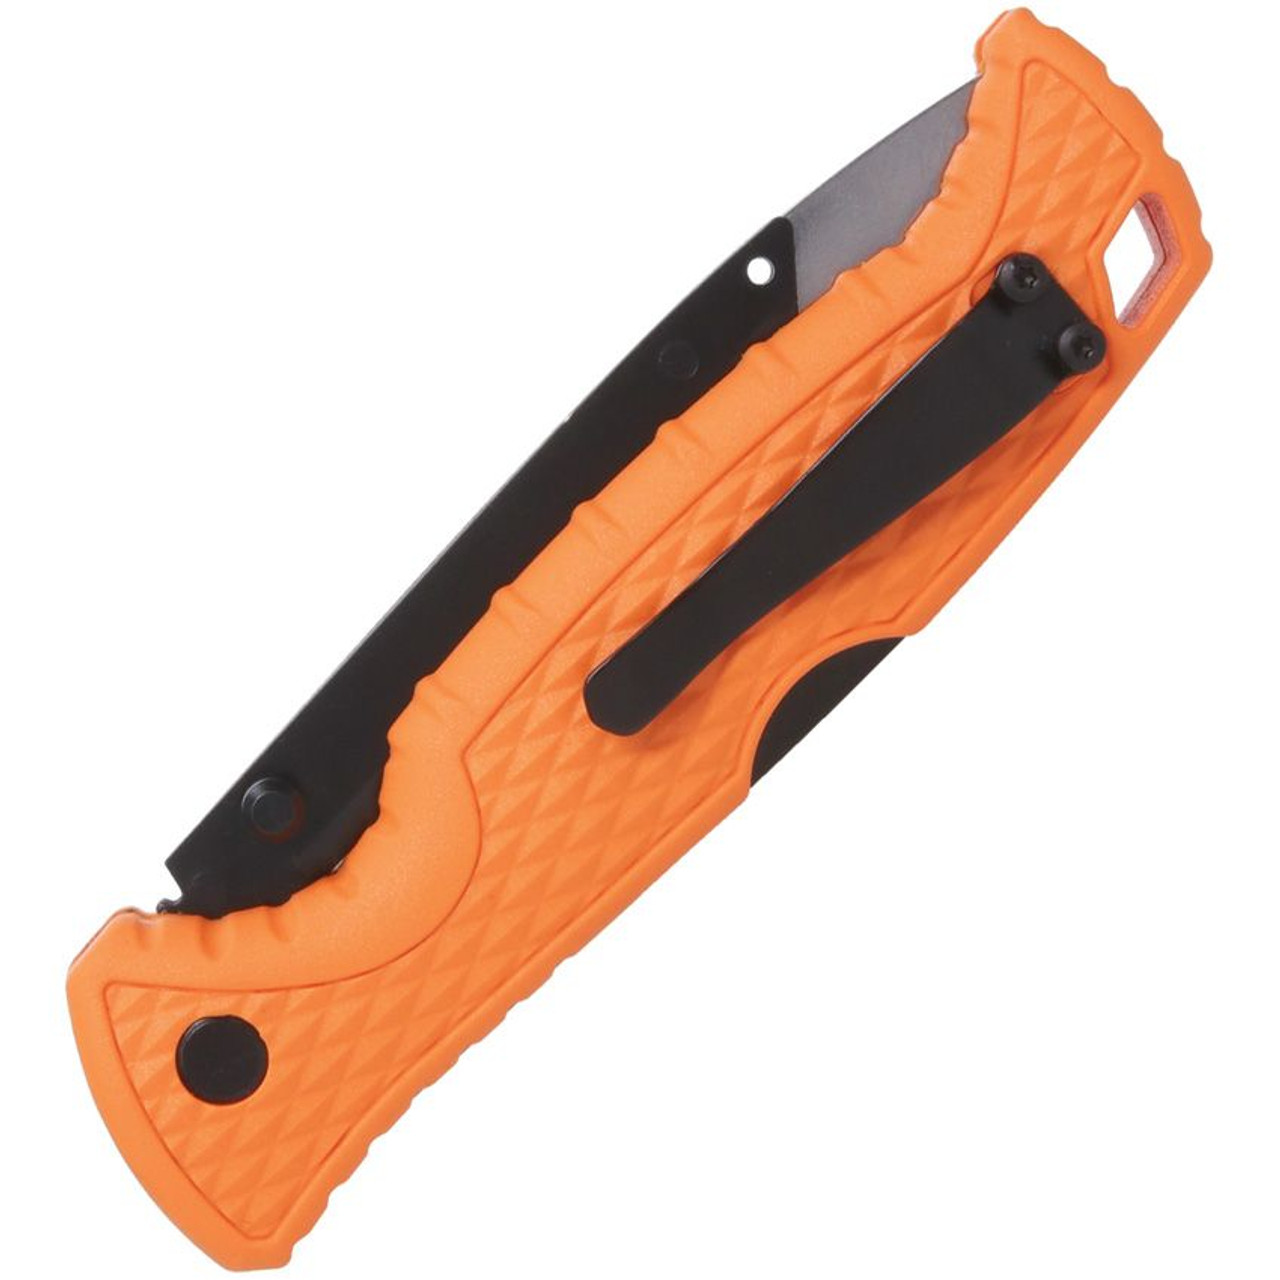 Muddy Swap Replace-A-Blade Knife - 3.5" Satin 420J2 Steel Drop Point Plain Blades, Orange GFN Handle